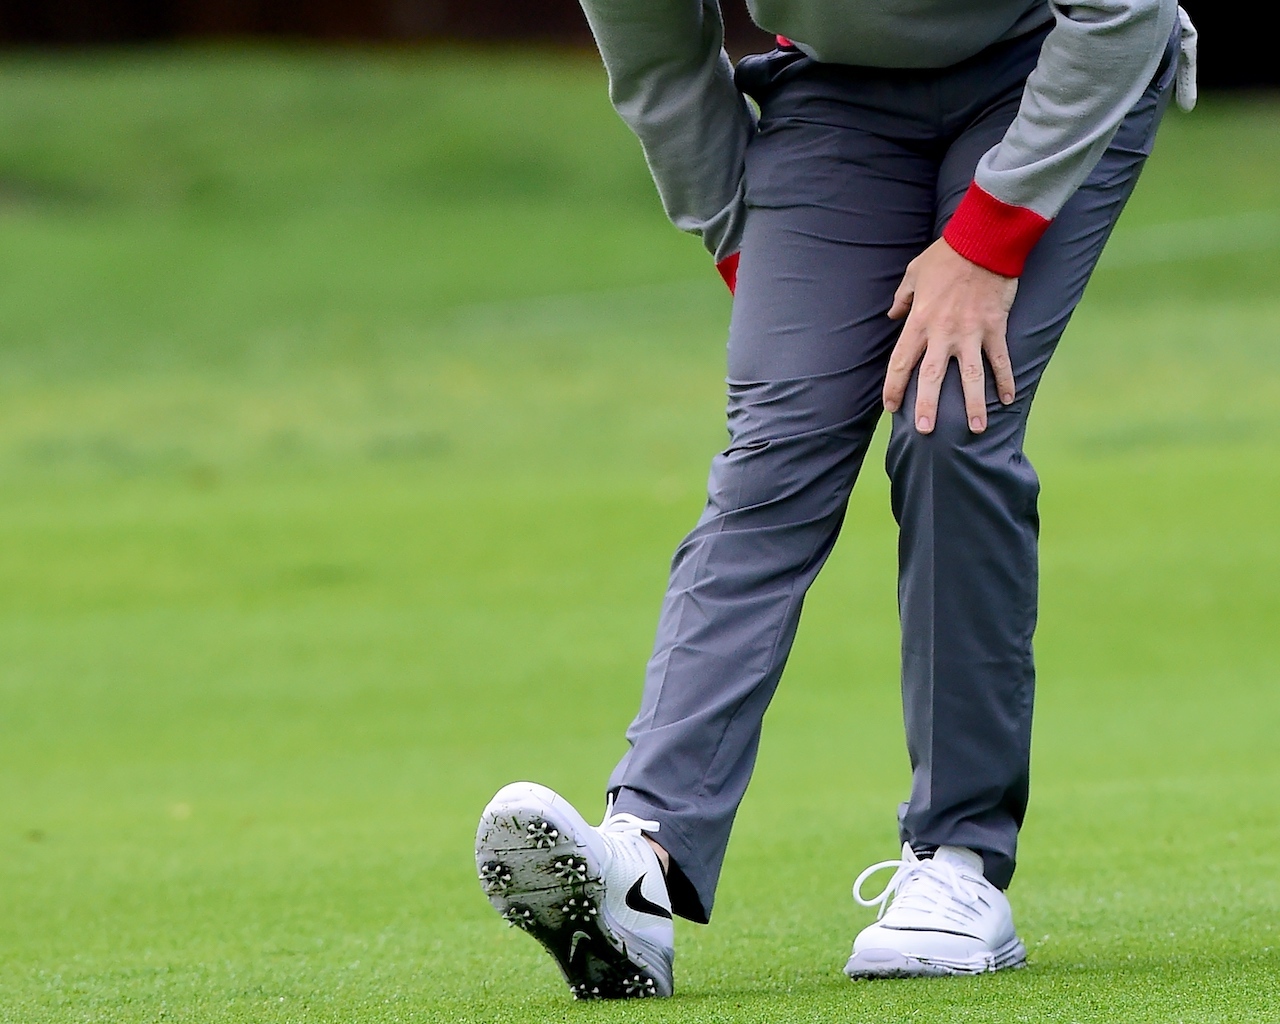 Golfer stretching legs before round